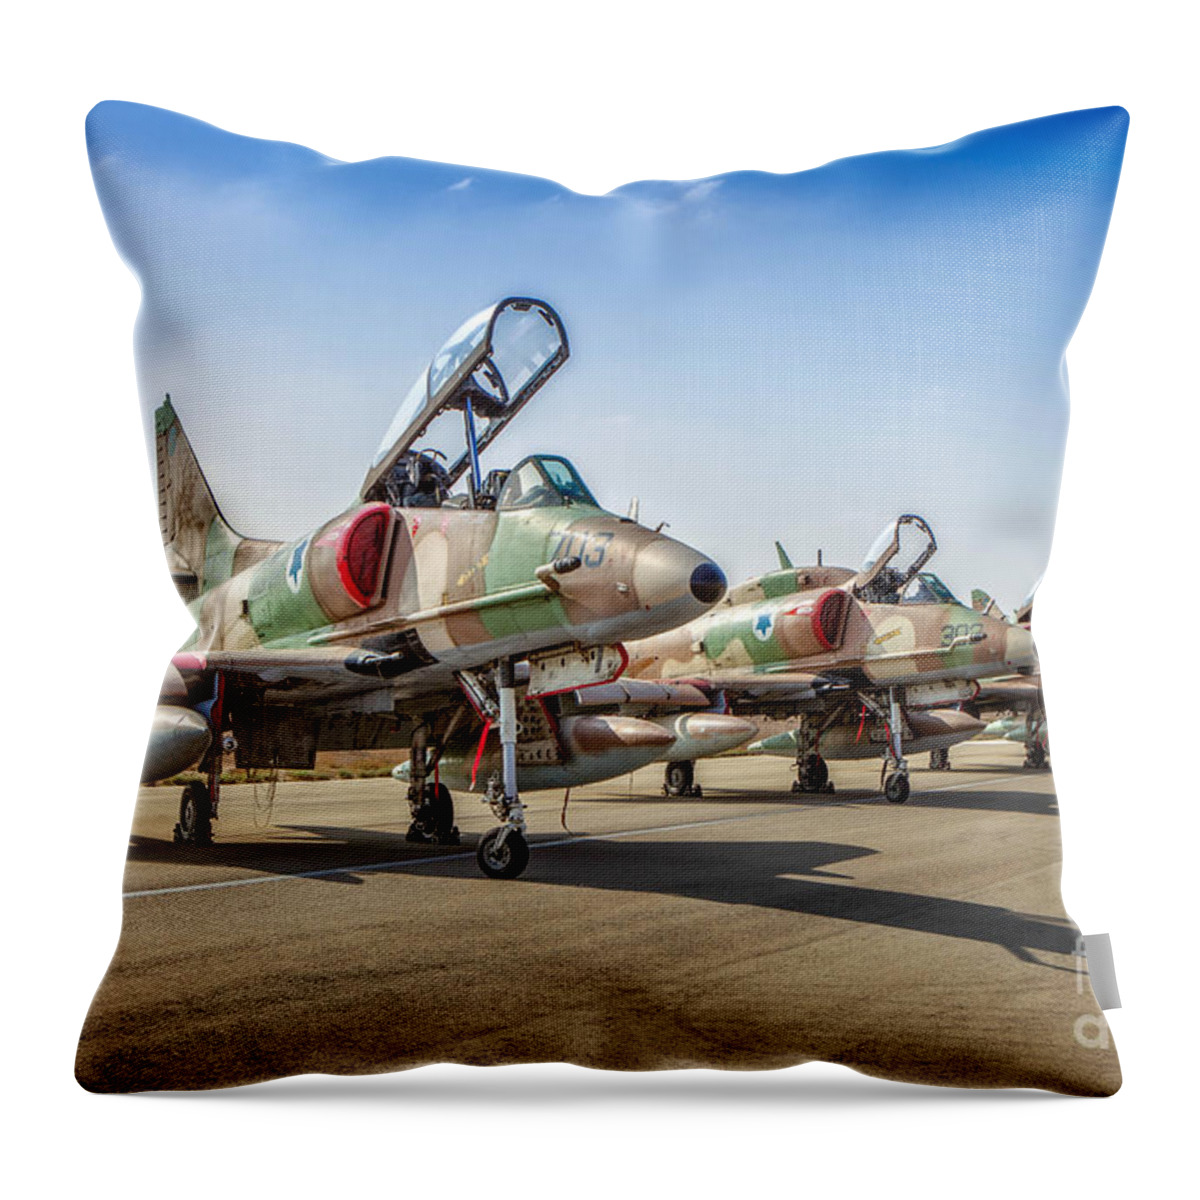 A-4 Throw Pillow featuring the photograph Israel Air Force A-4 skyhawk #12 by Nir Ben-Yosef